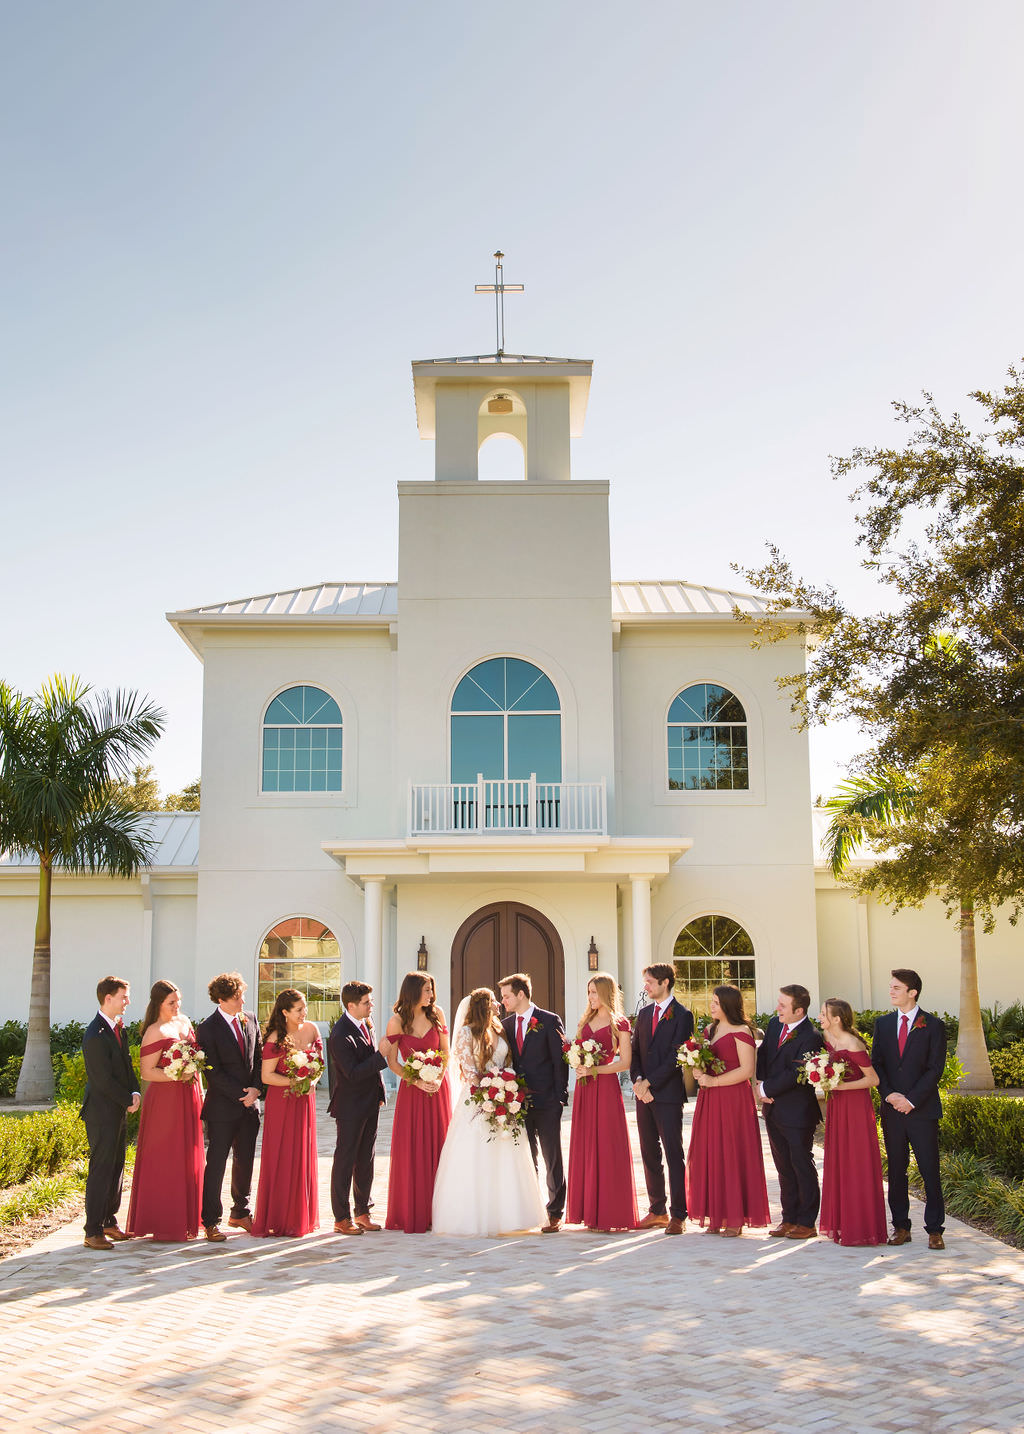 Tampa Bay Bride, Groom, Bridesmaids and Groomsmen Wedding Party Portrait, Bridesmaids in Long Red Dresses | Safety Harbor Wedding Ceremony Venue Harborside Chapel